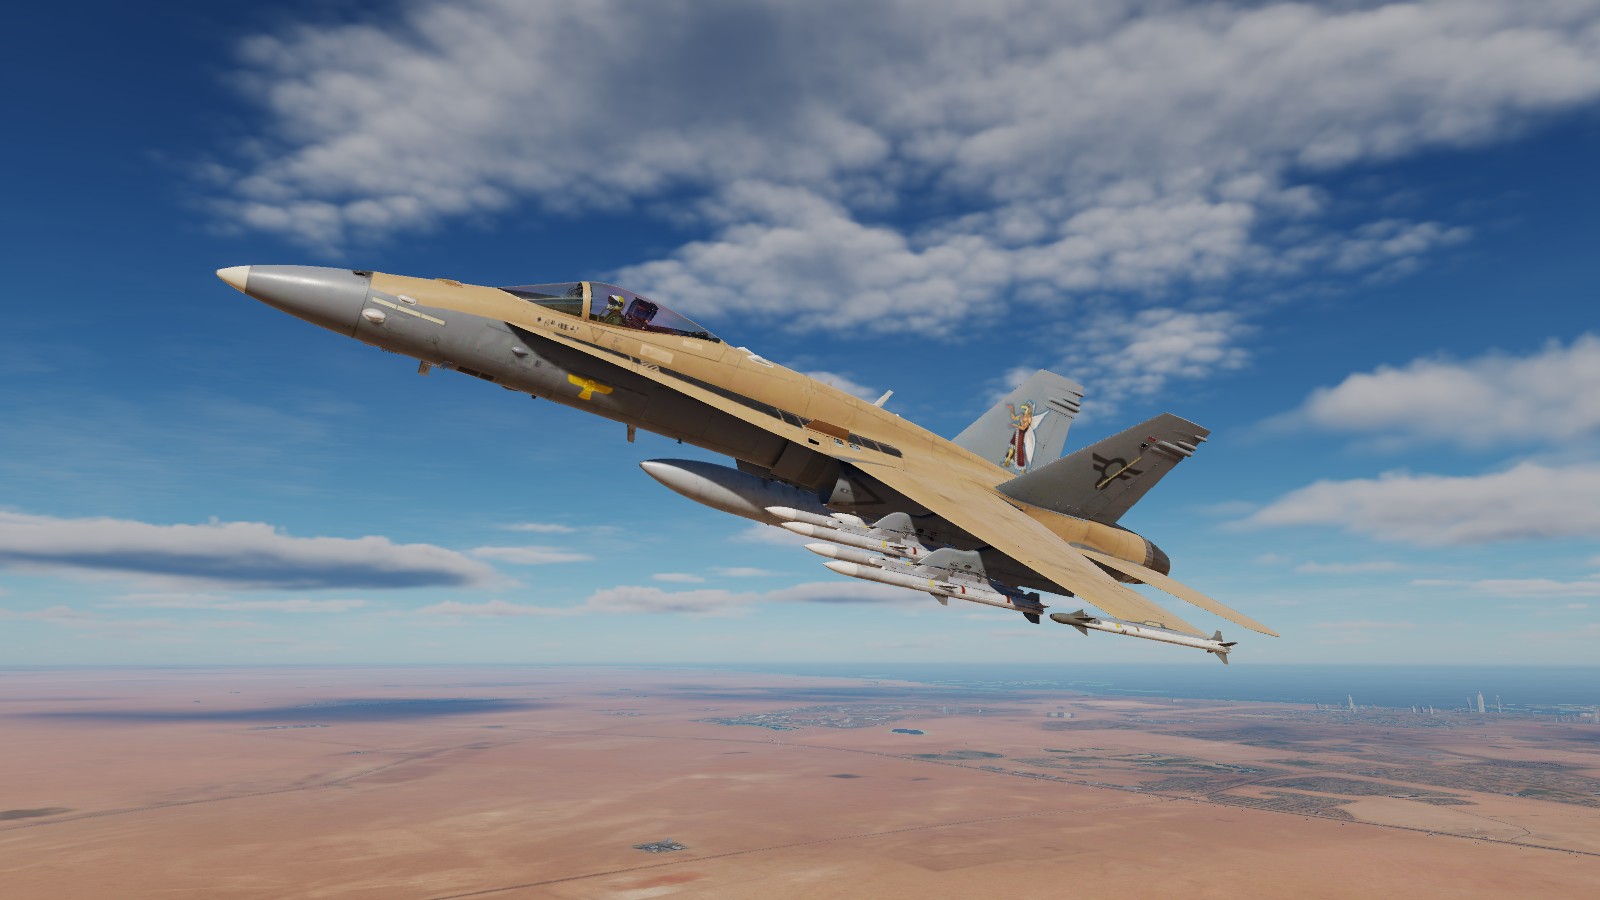 Fictional F-18C Livery - "SKY GODS"